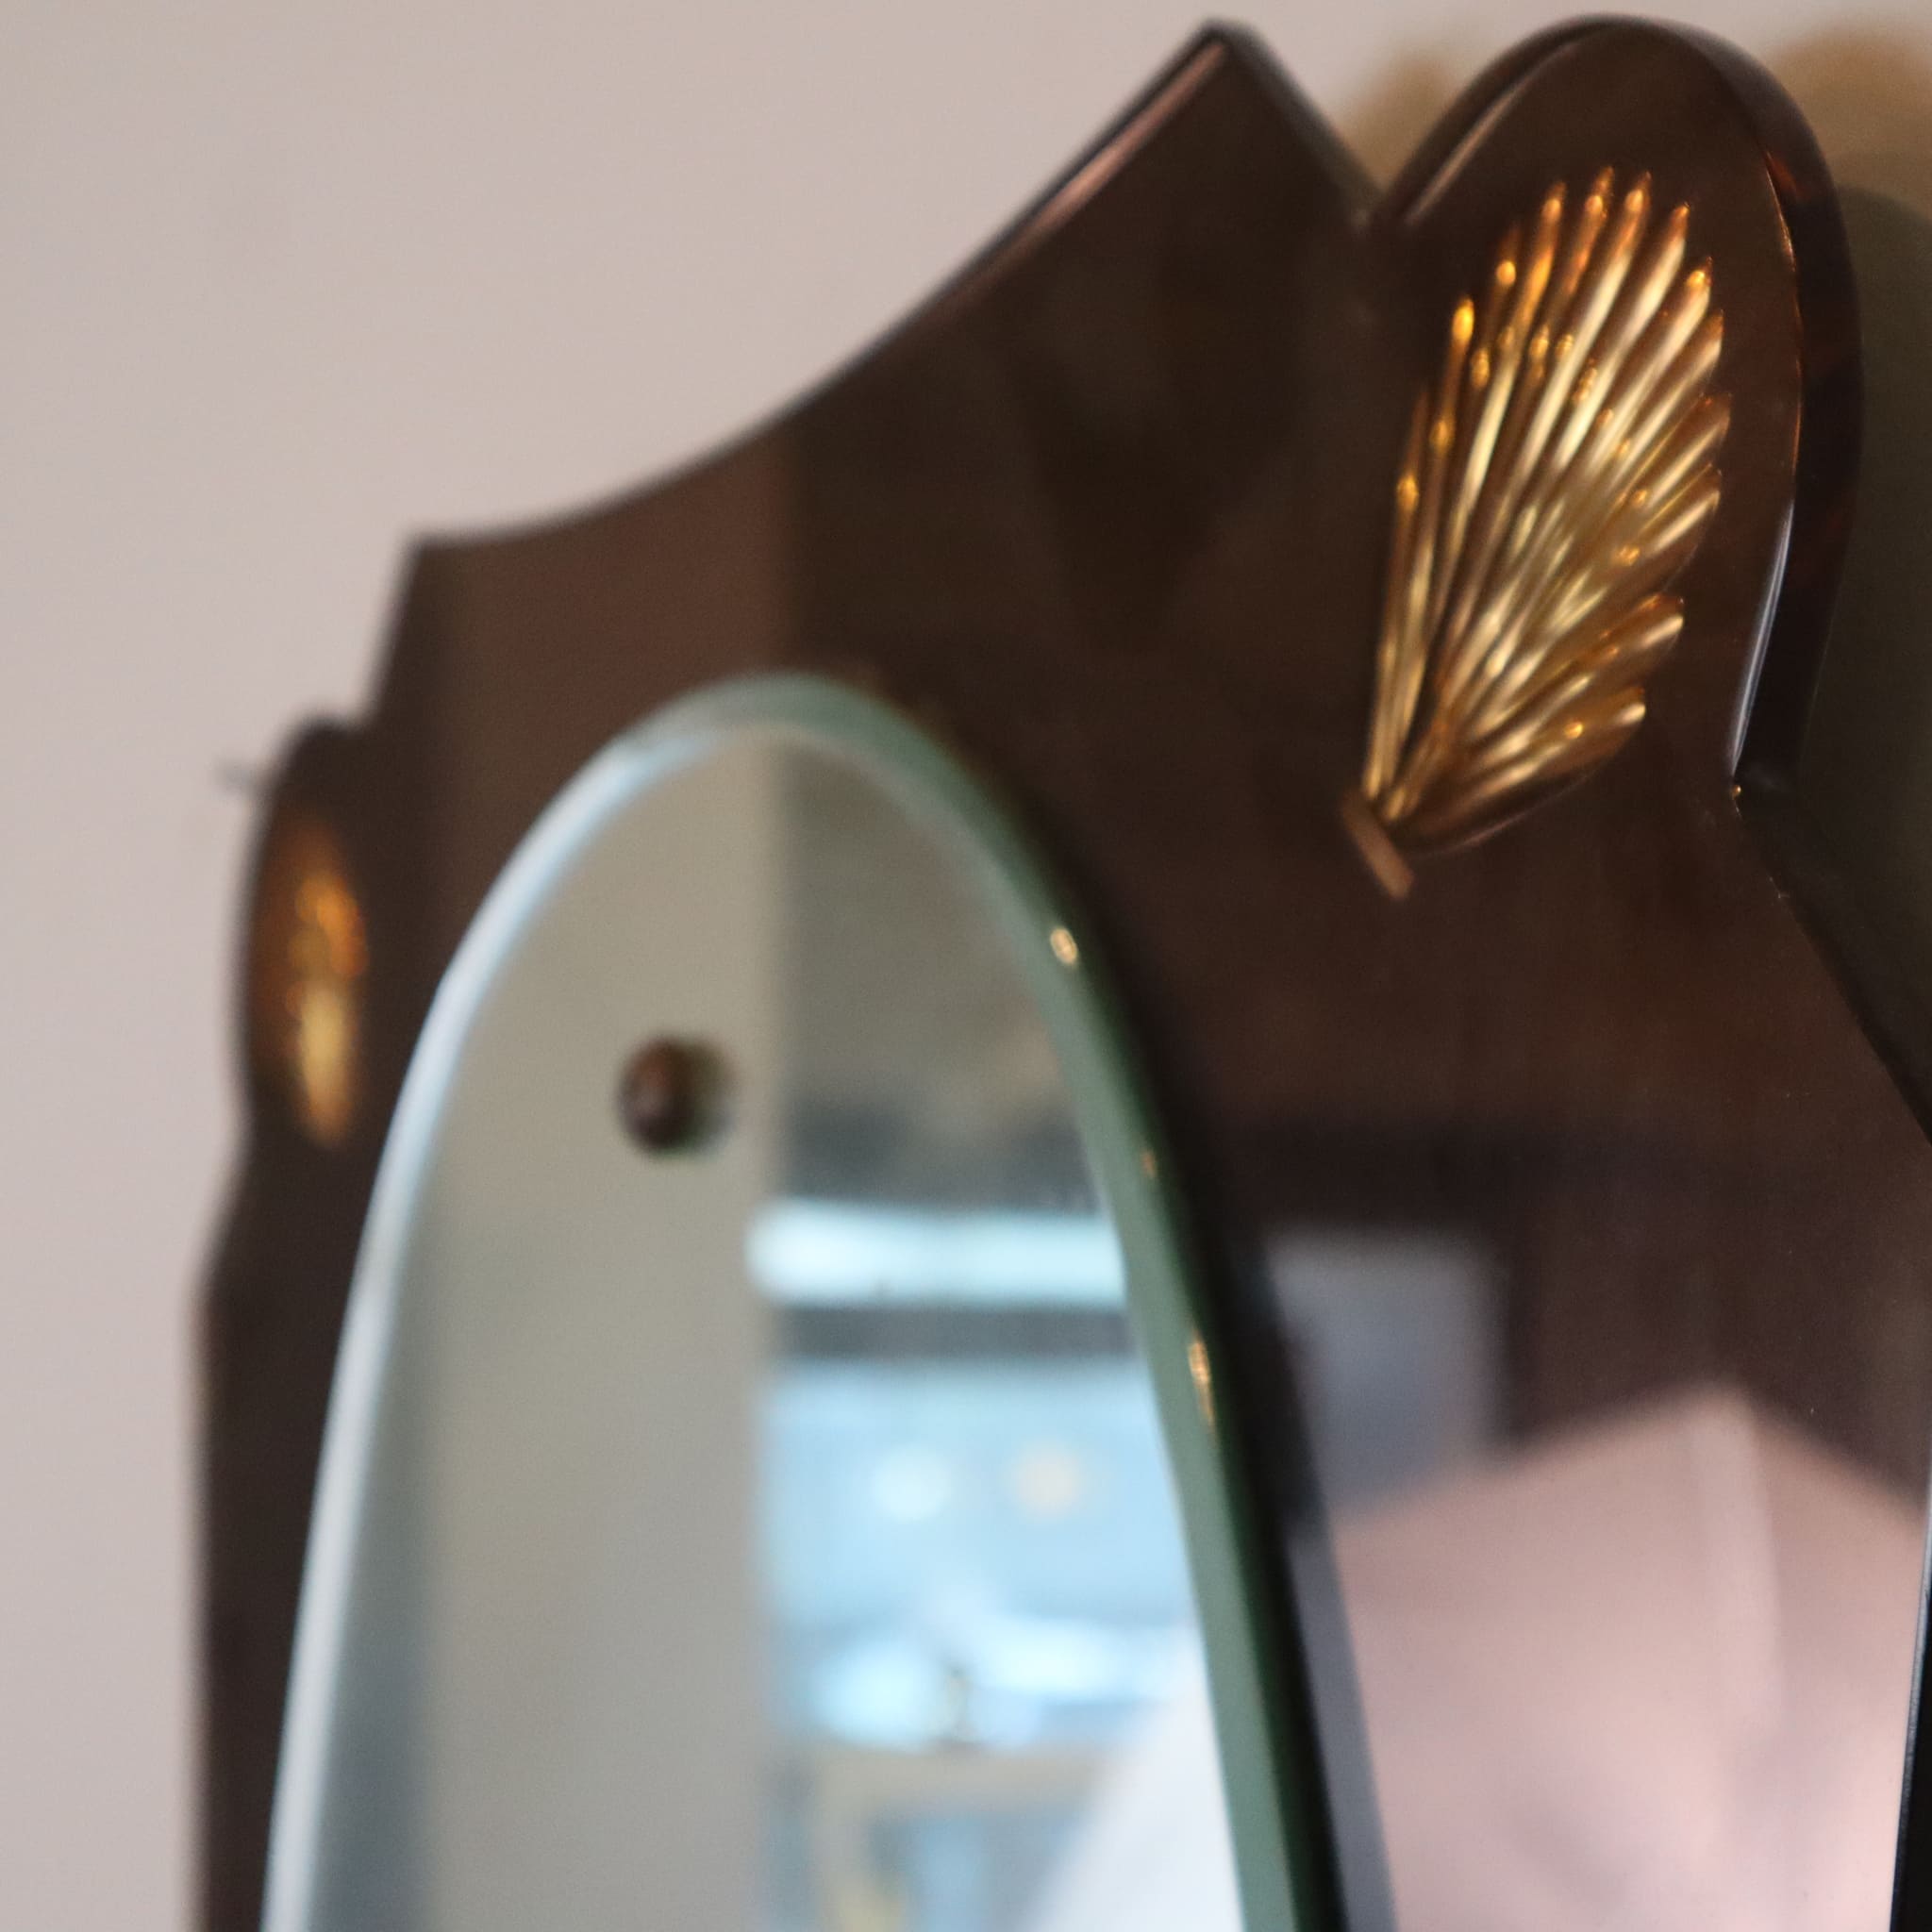 visionidepoca-modern-antique-mirror-vintage-cristal-art-style-60s-with-shell-details-gold-coloured-framing-details-2